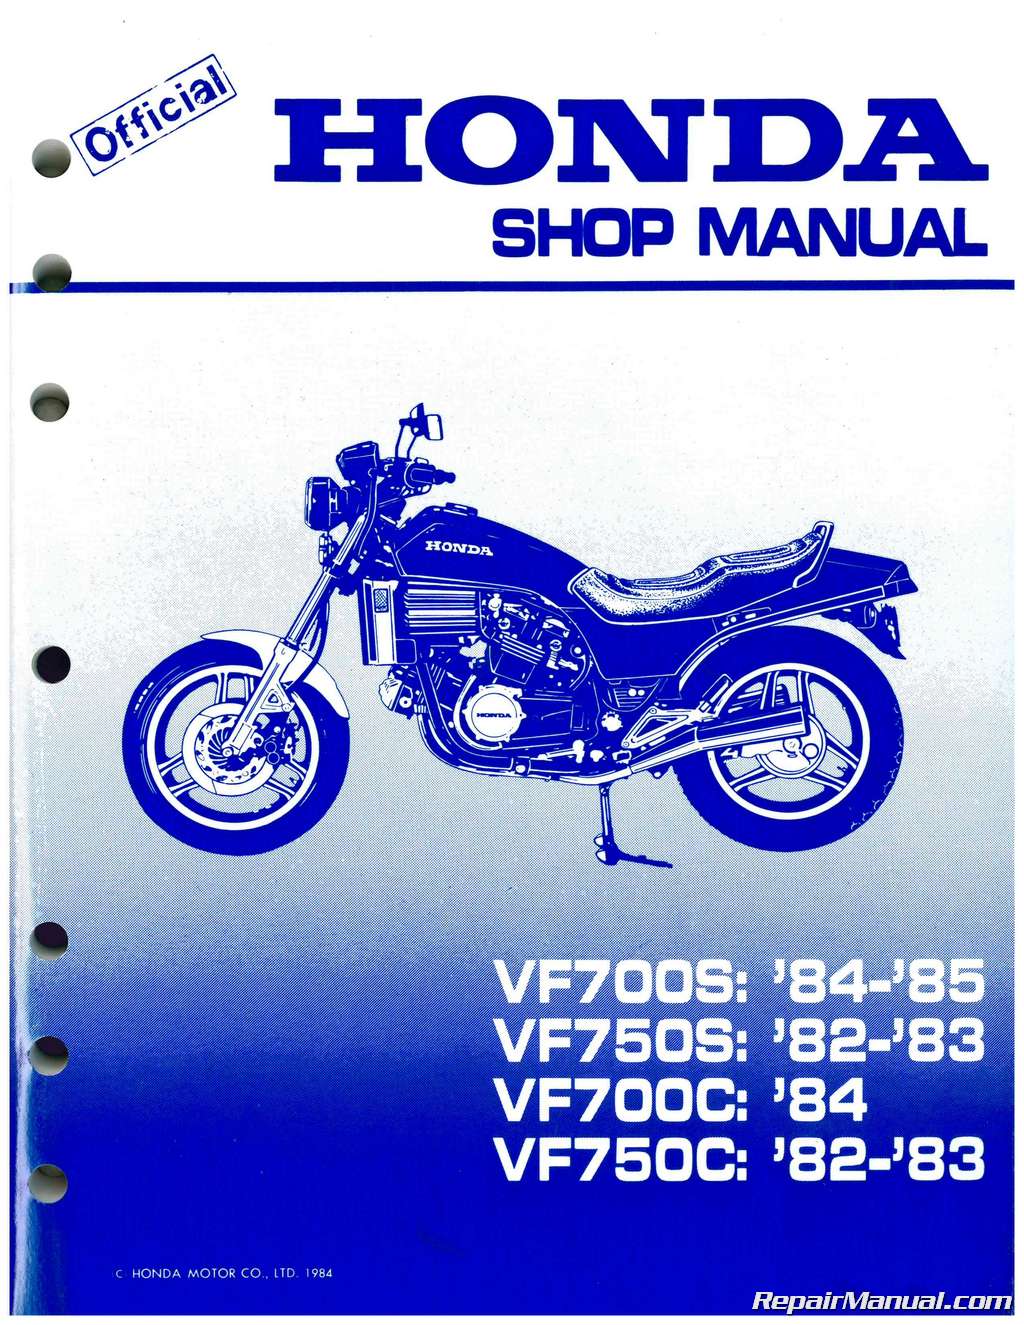 1982 Honda magna service manual download #4